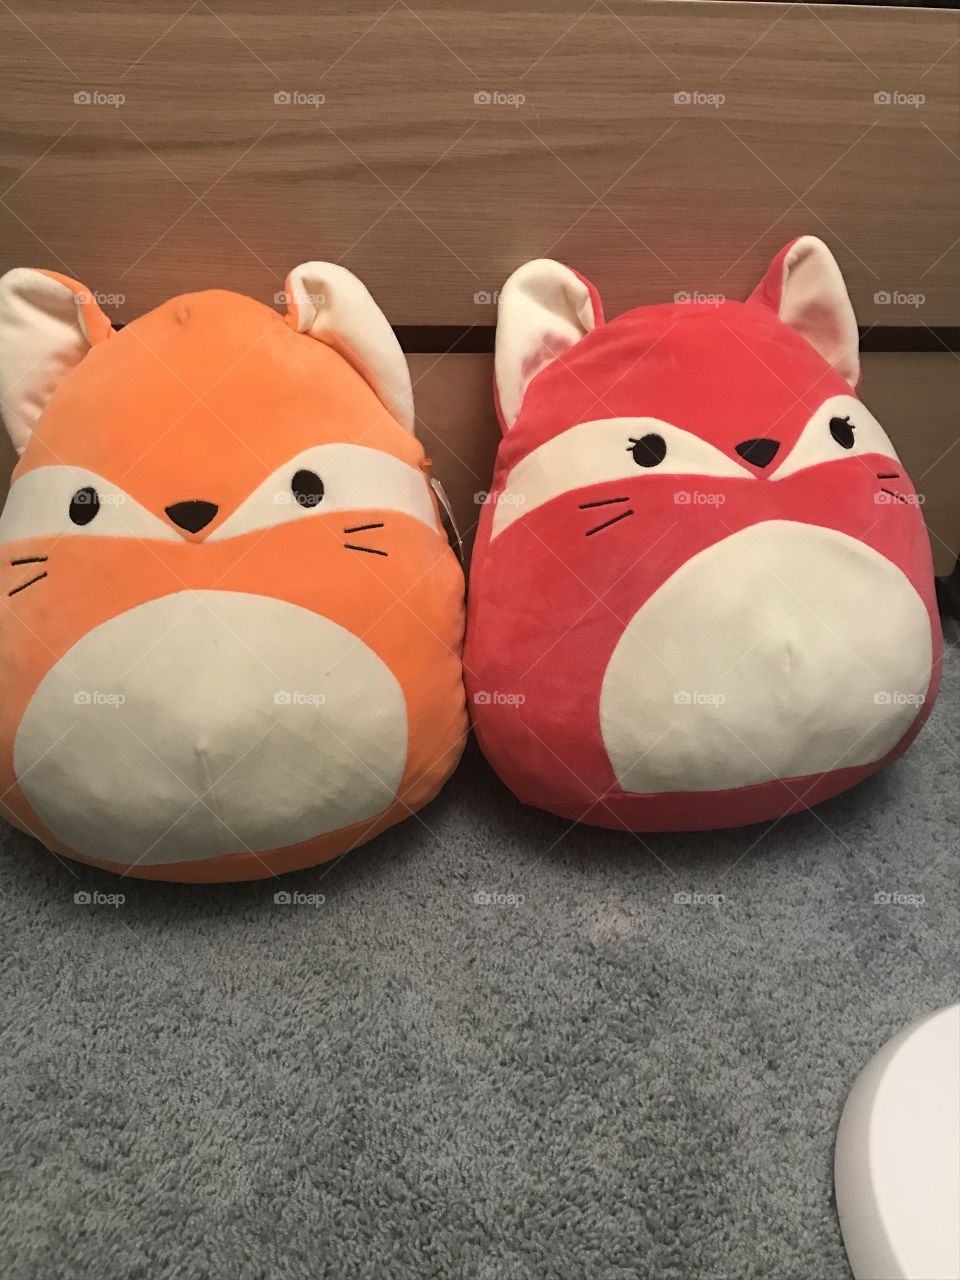 Two stuffed animals